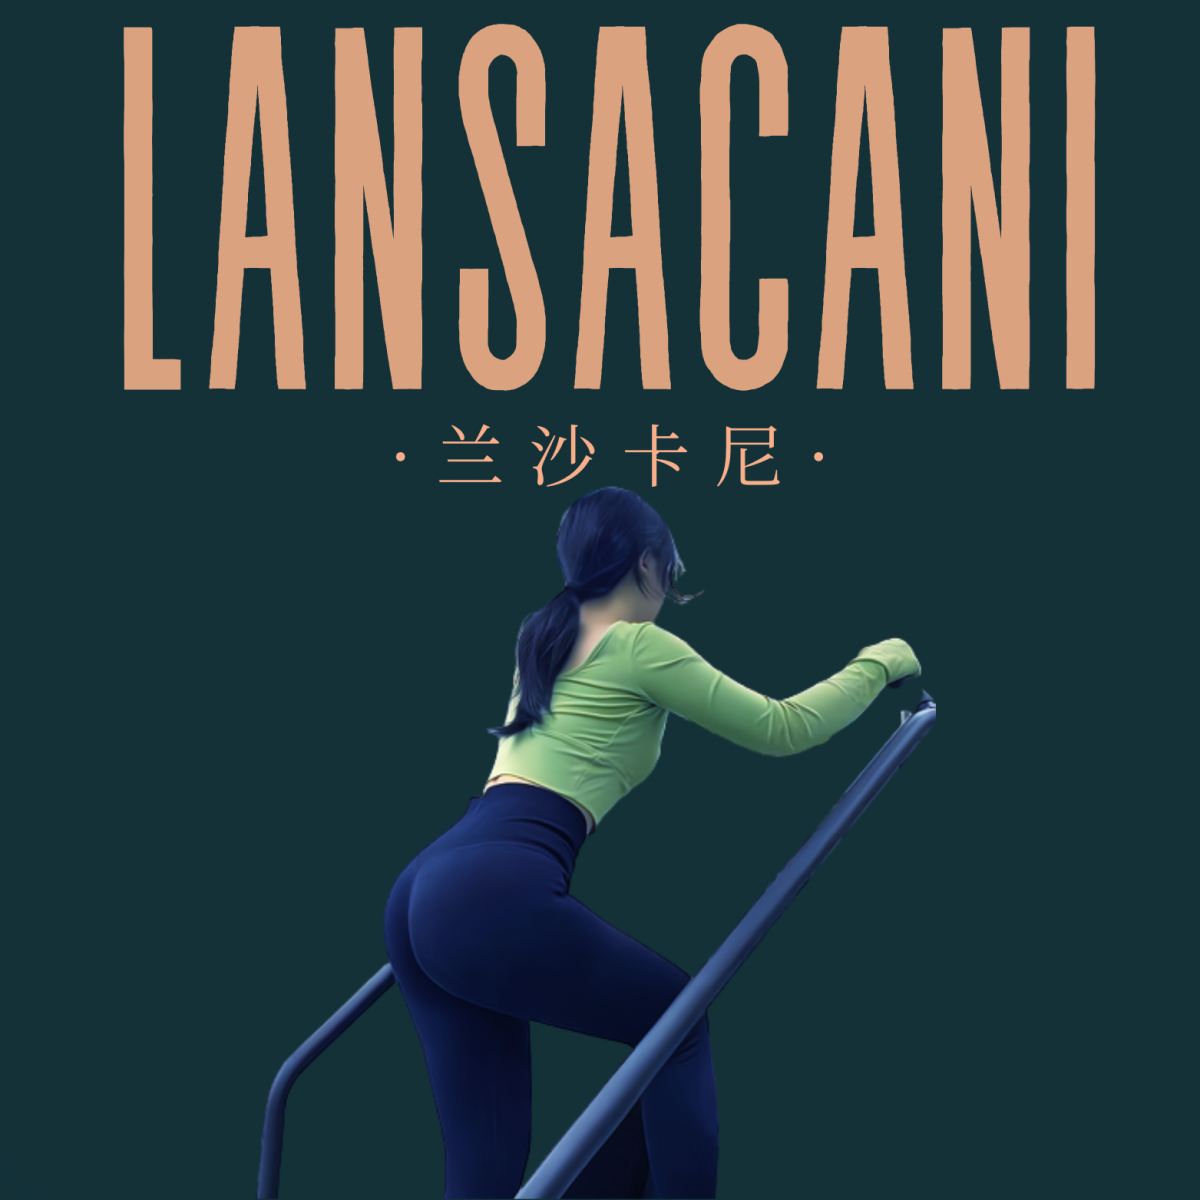 Lansacani 服装工作室の专注大码